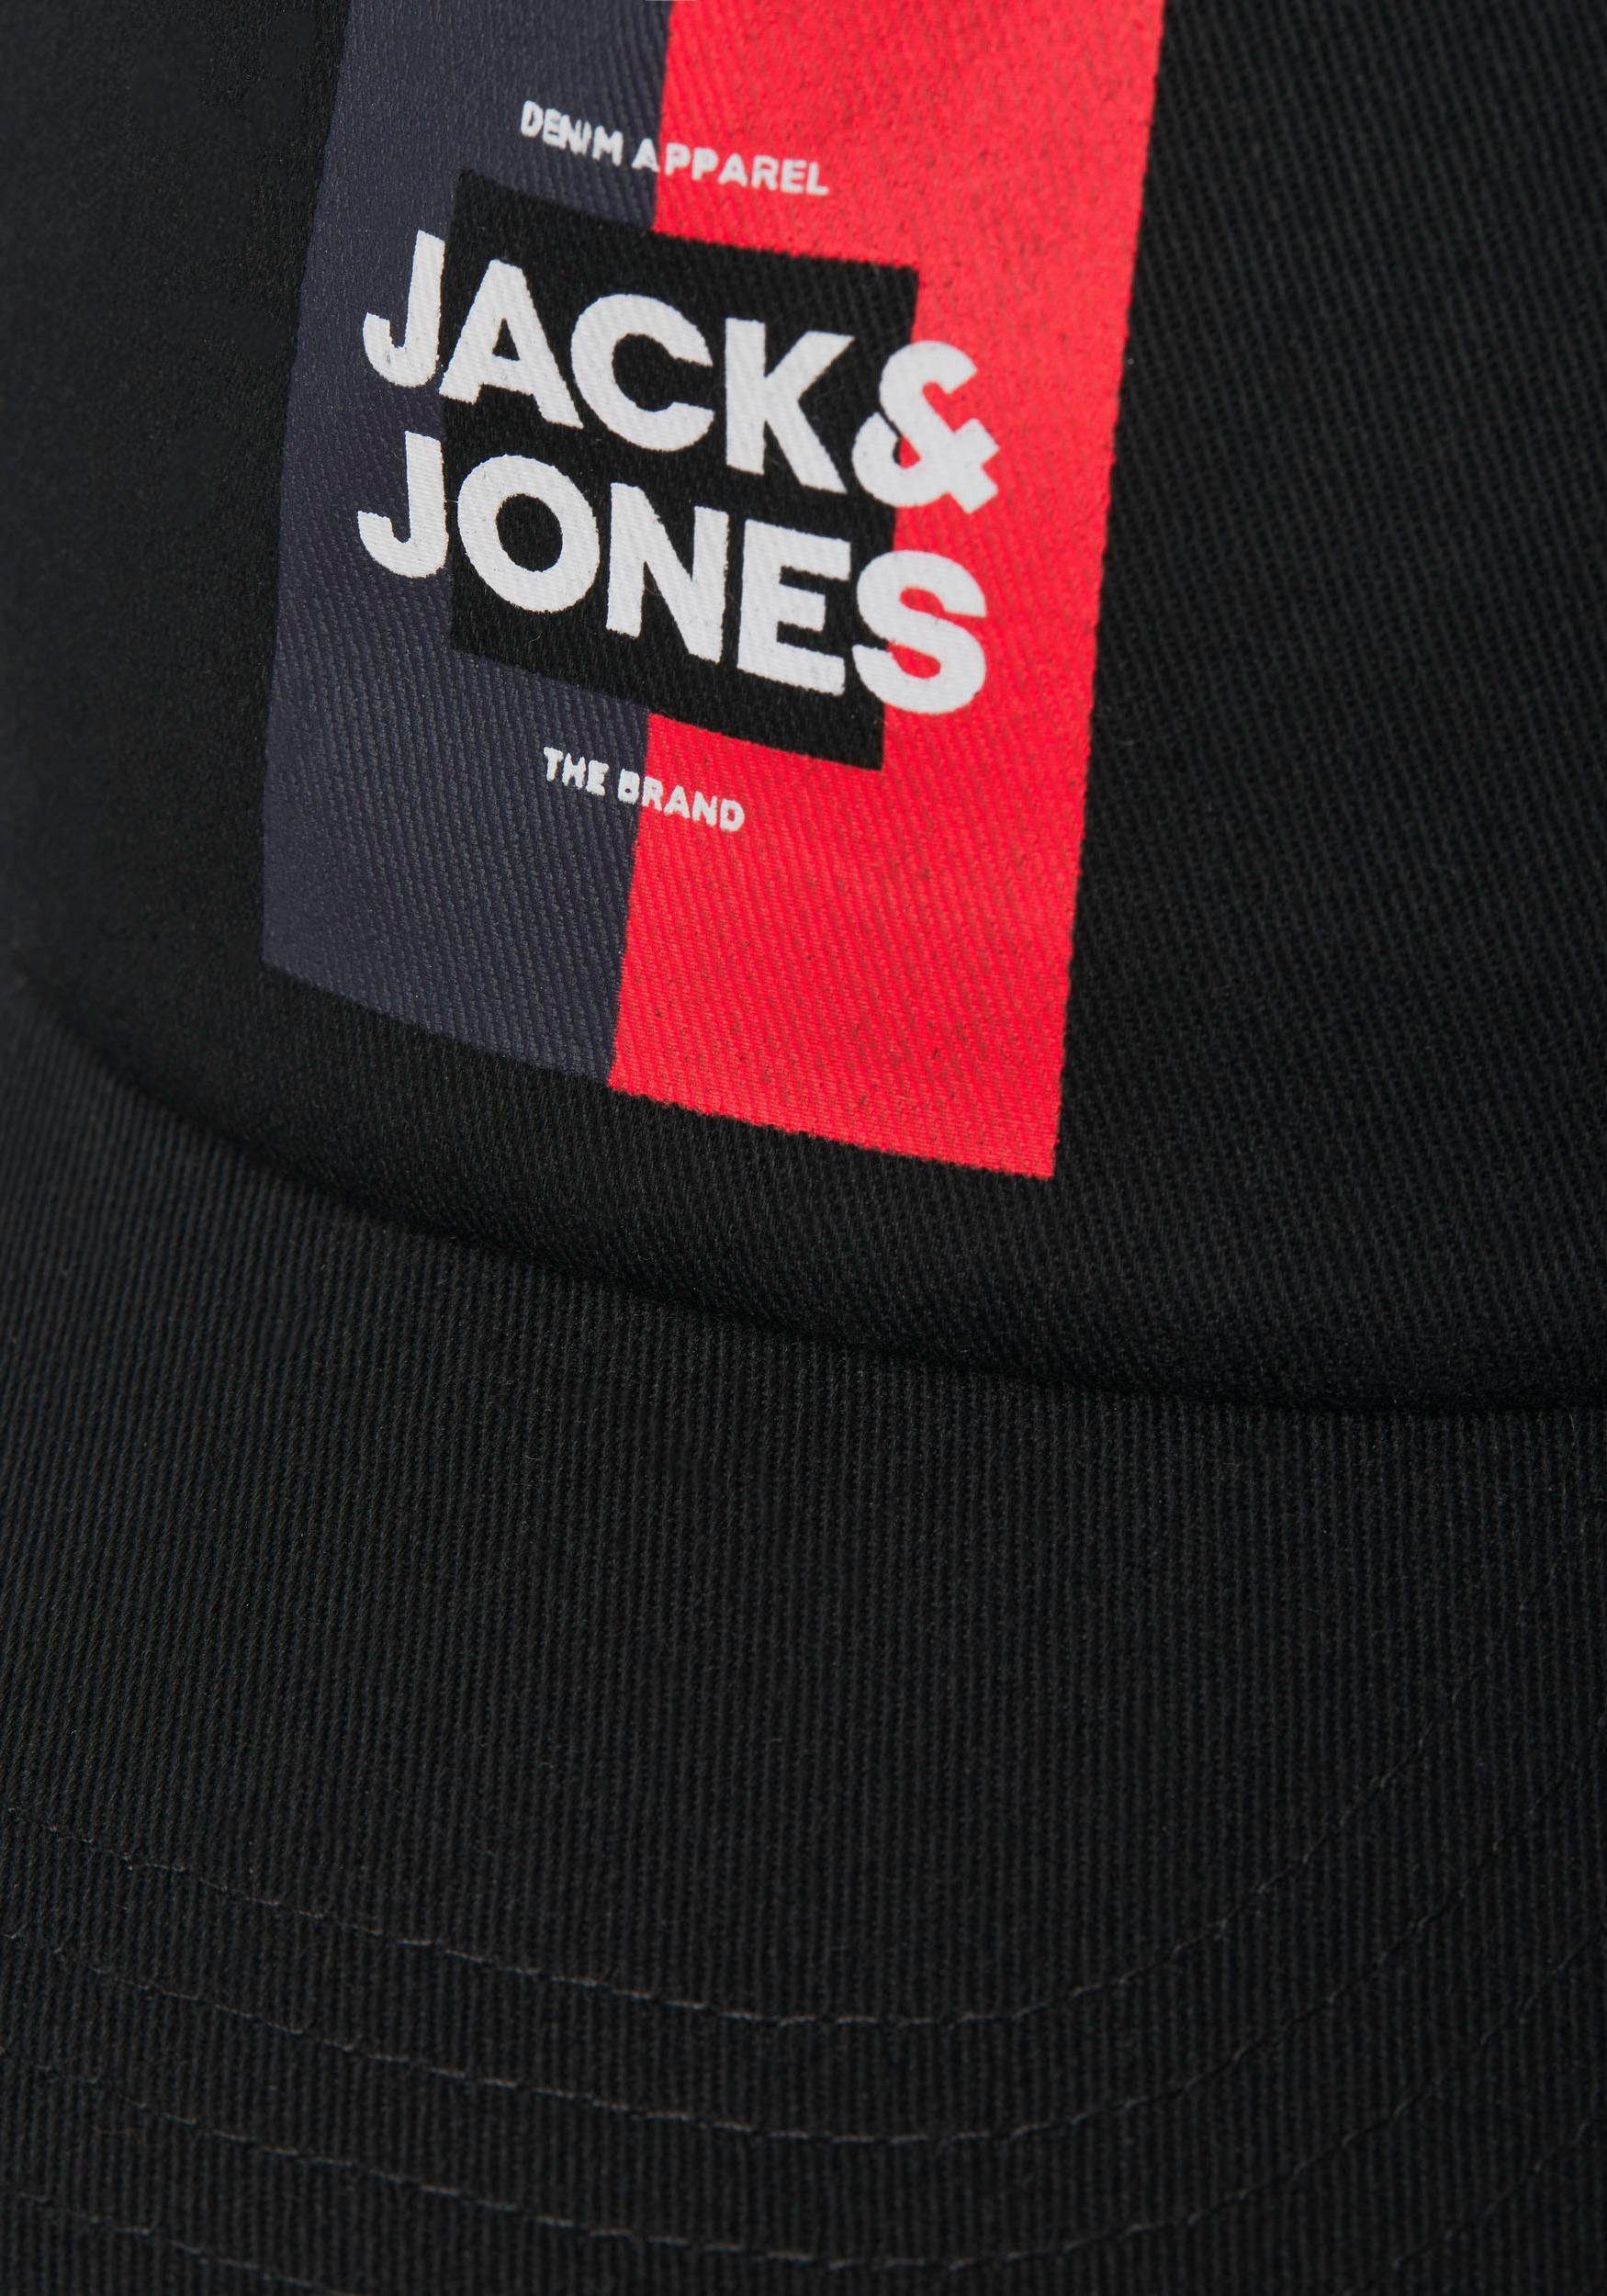 Baseball Jones Cap JACOSCAR Jack & CAP